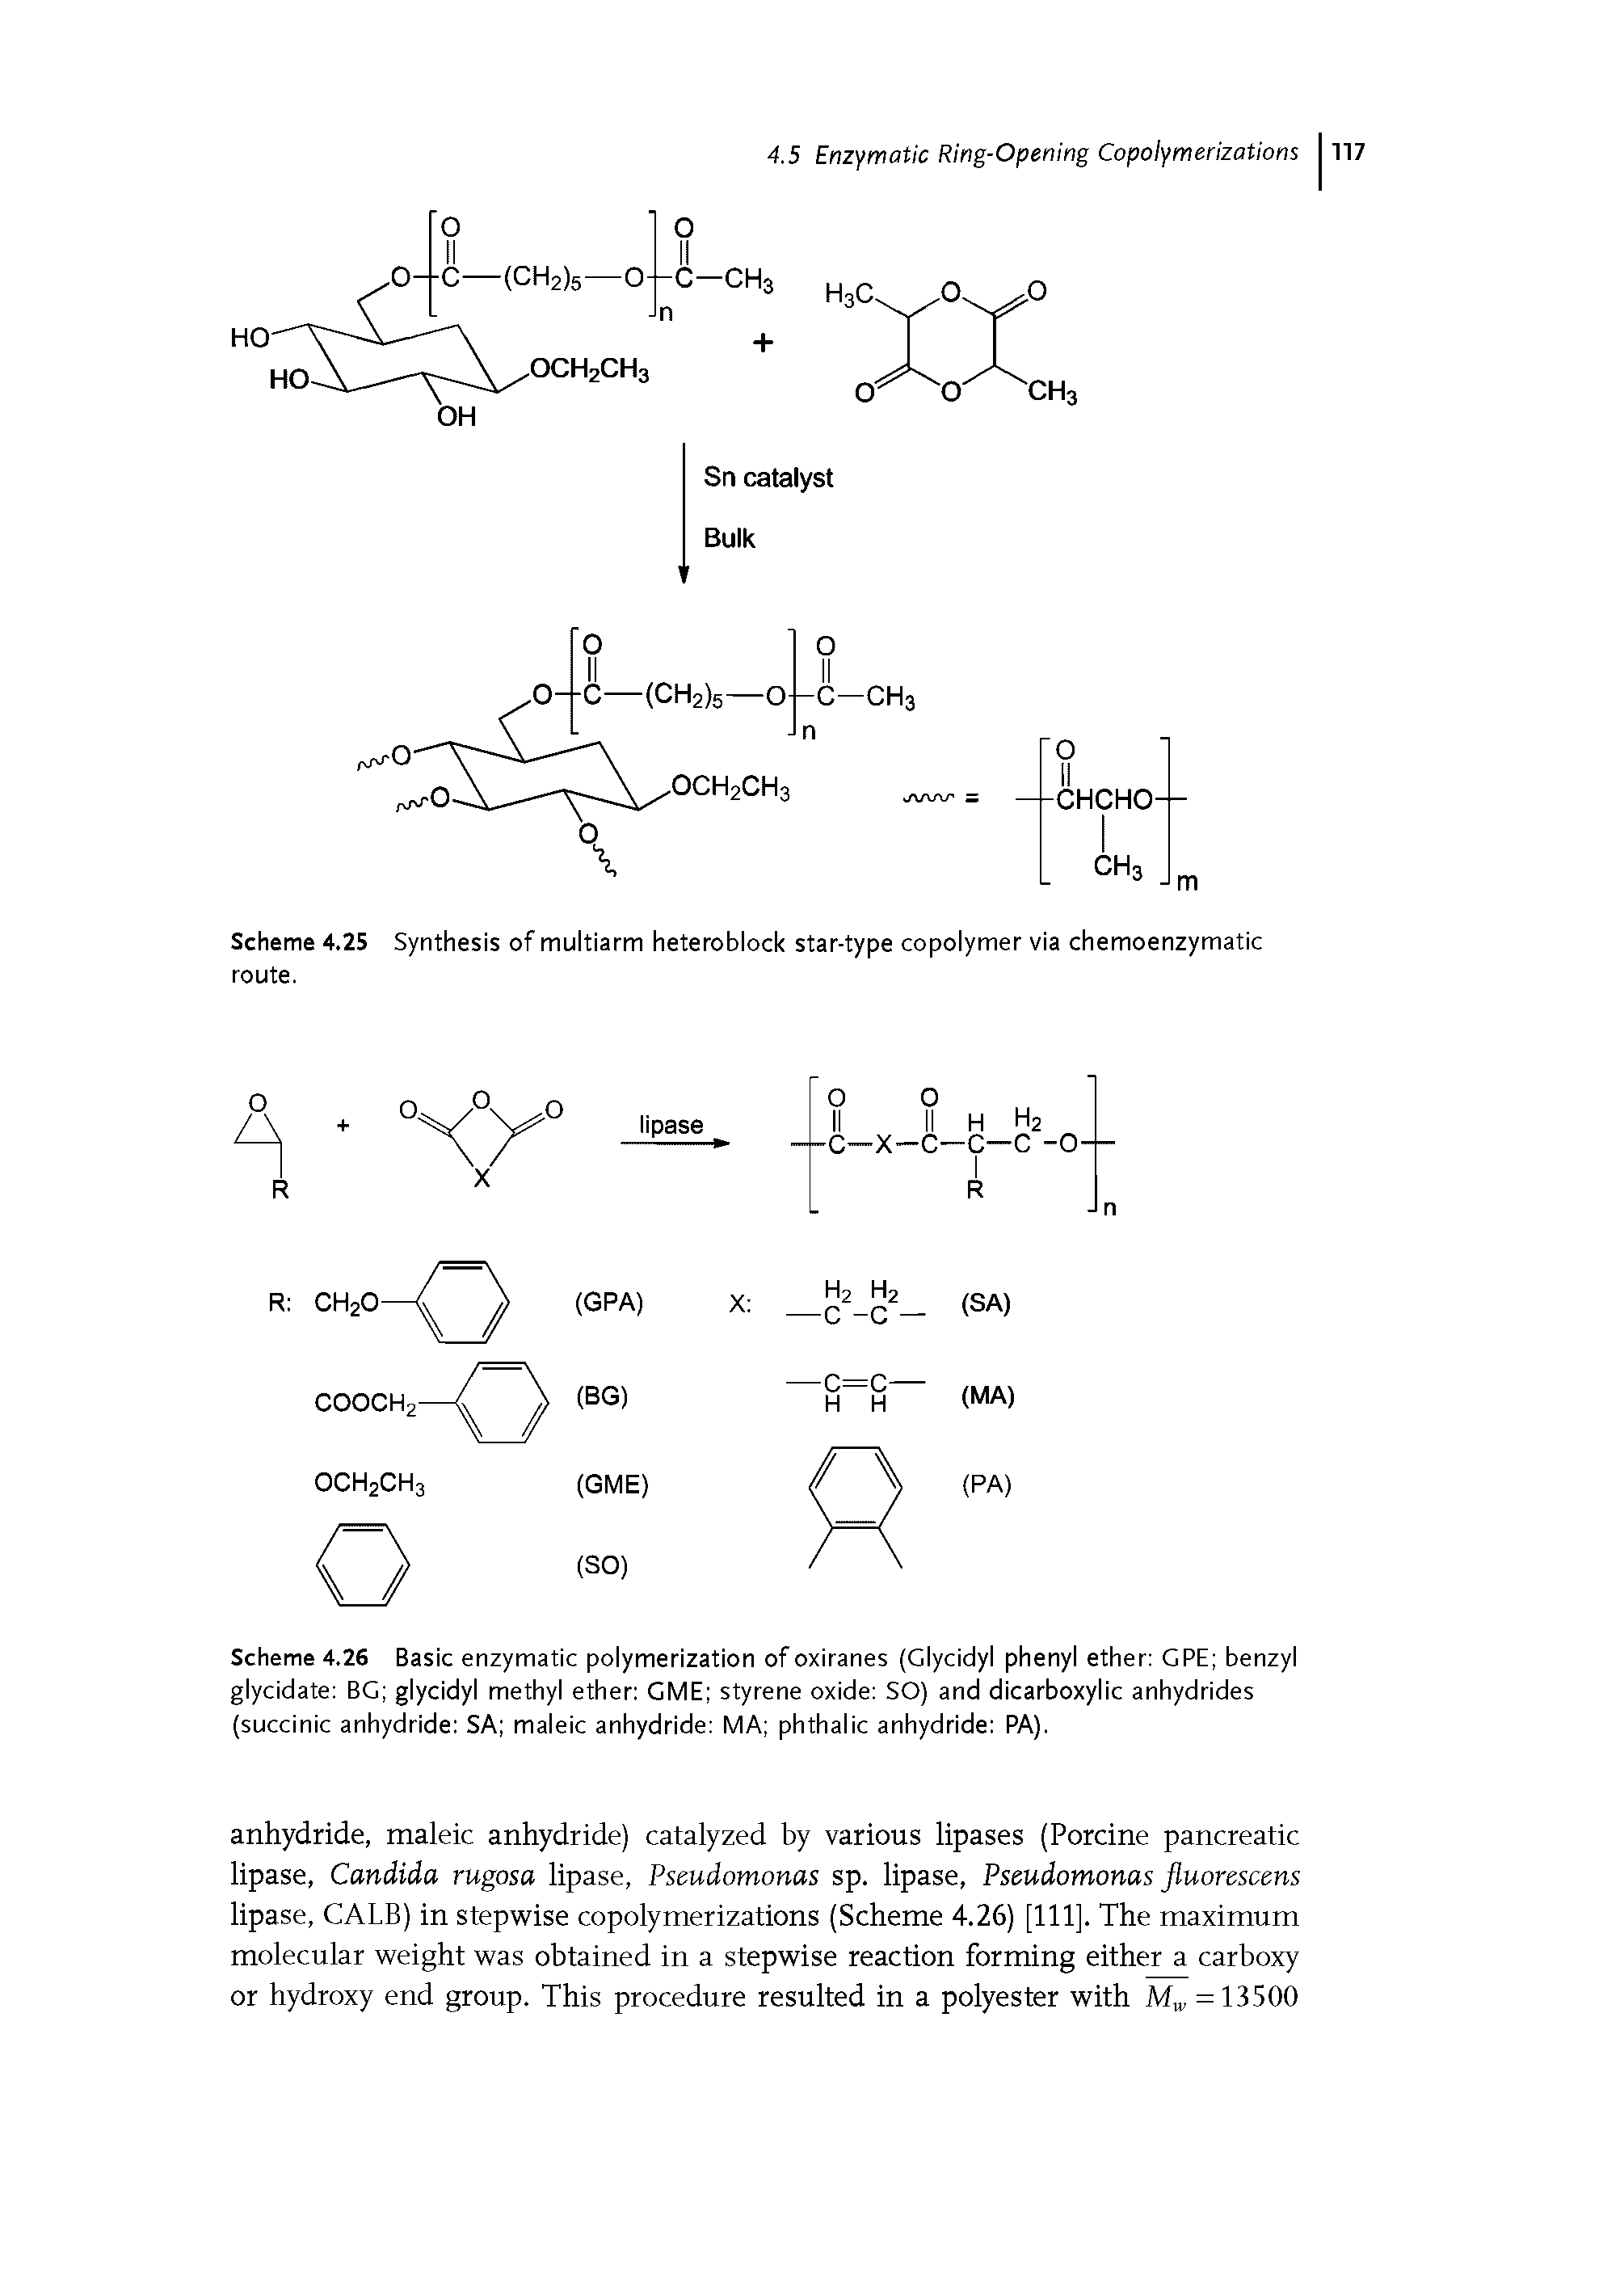 Scheme 4.25 Synthesis of multiarm heteroblock star-type copolymer via chemoenzymatic route.